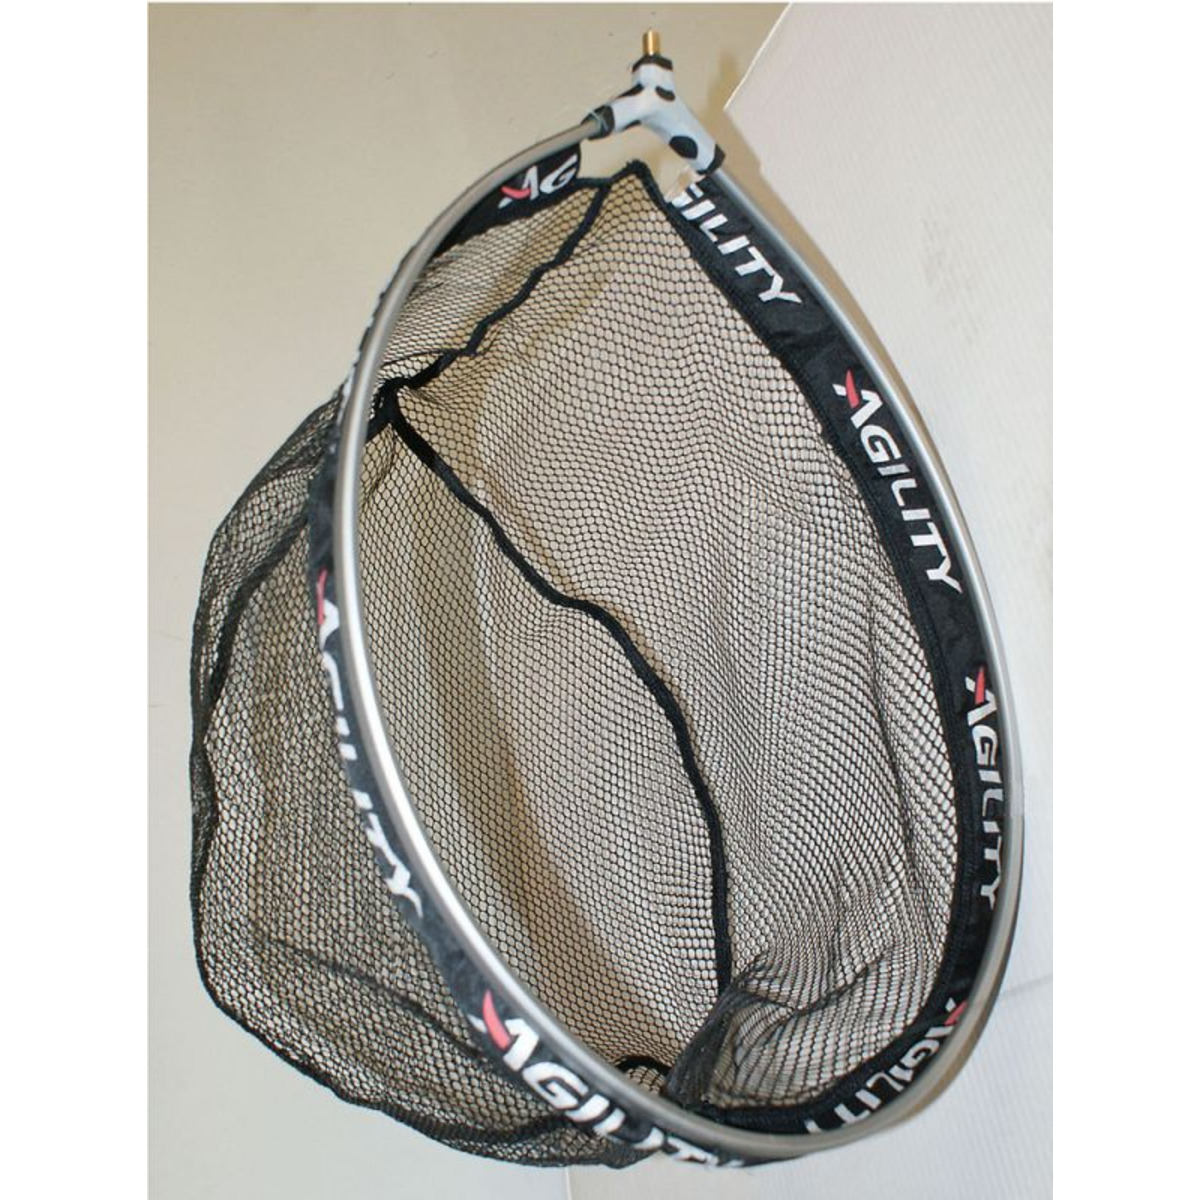 Shakespeare Agility Coarse Nets - Medium - 55x40x2 cm - 0.35 kg 